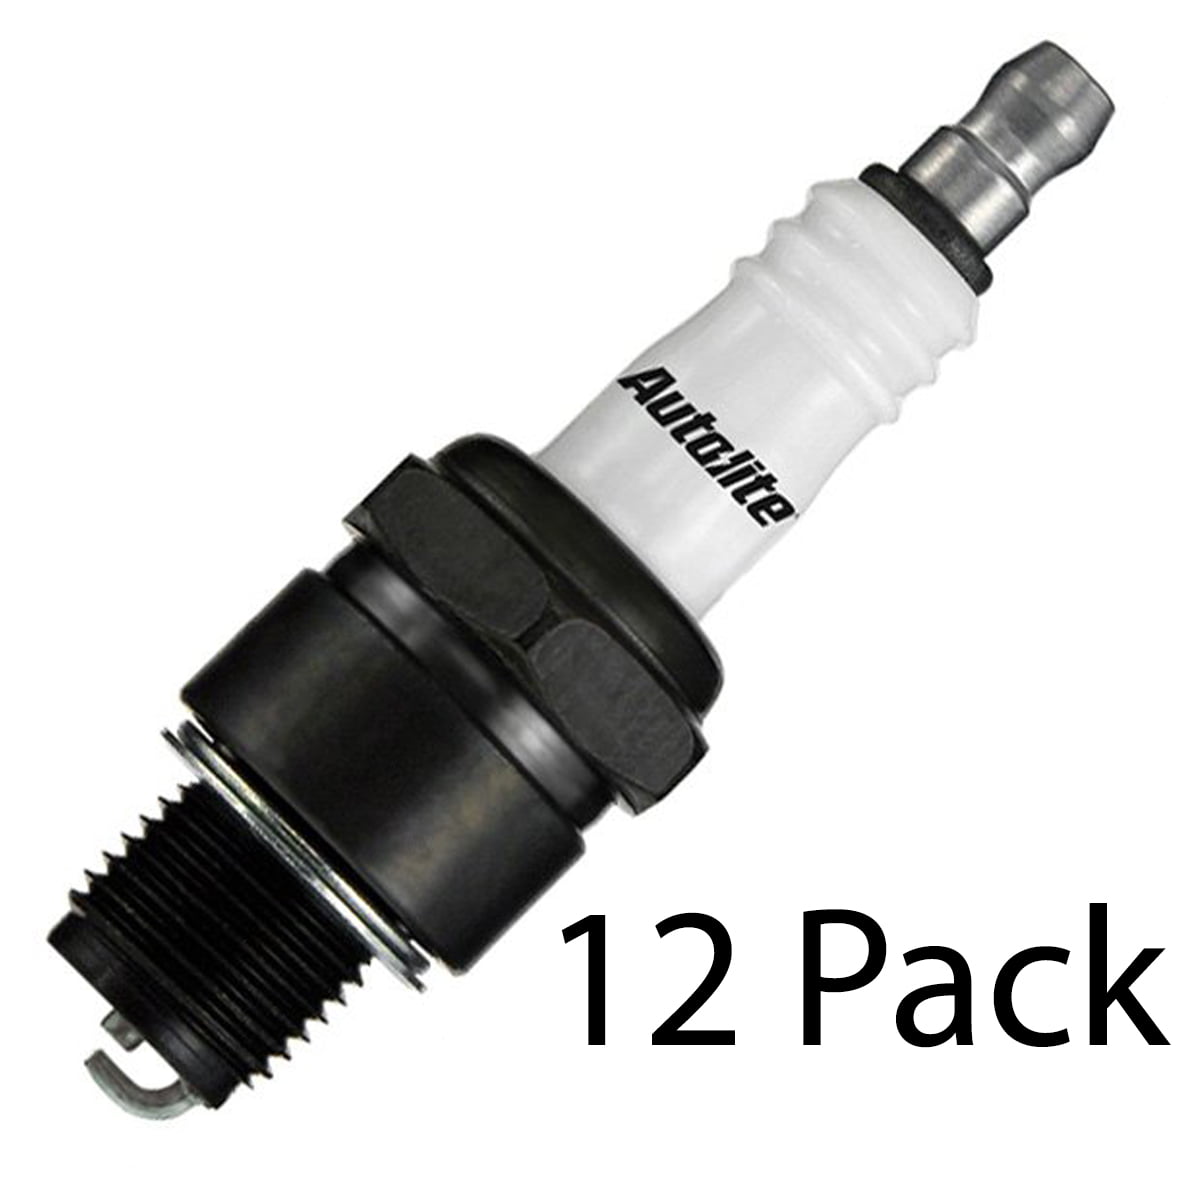 12 Pack Small Engine Copper Core Spark Plugs # 414-12PK Autolite 